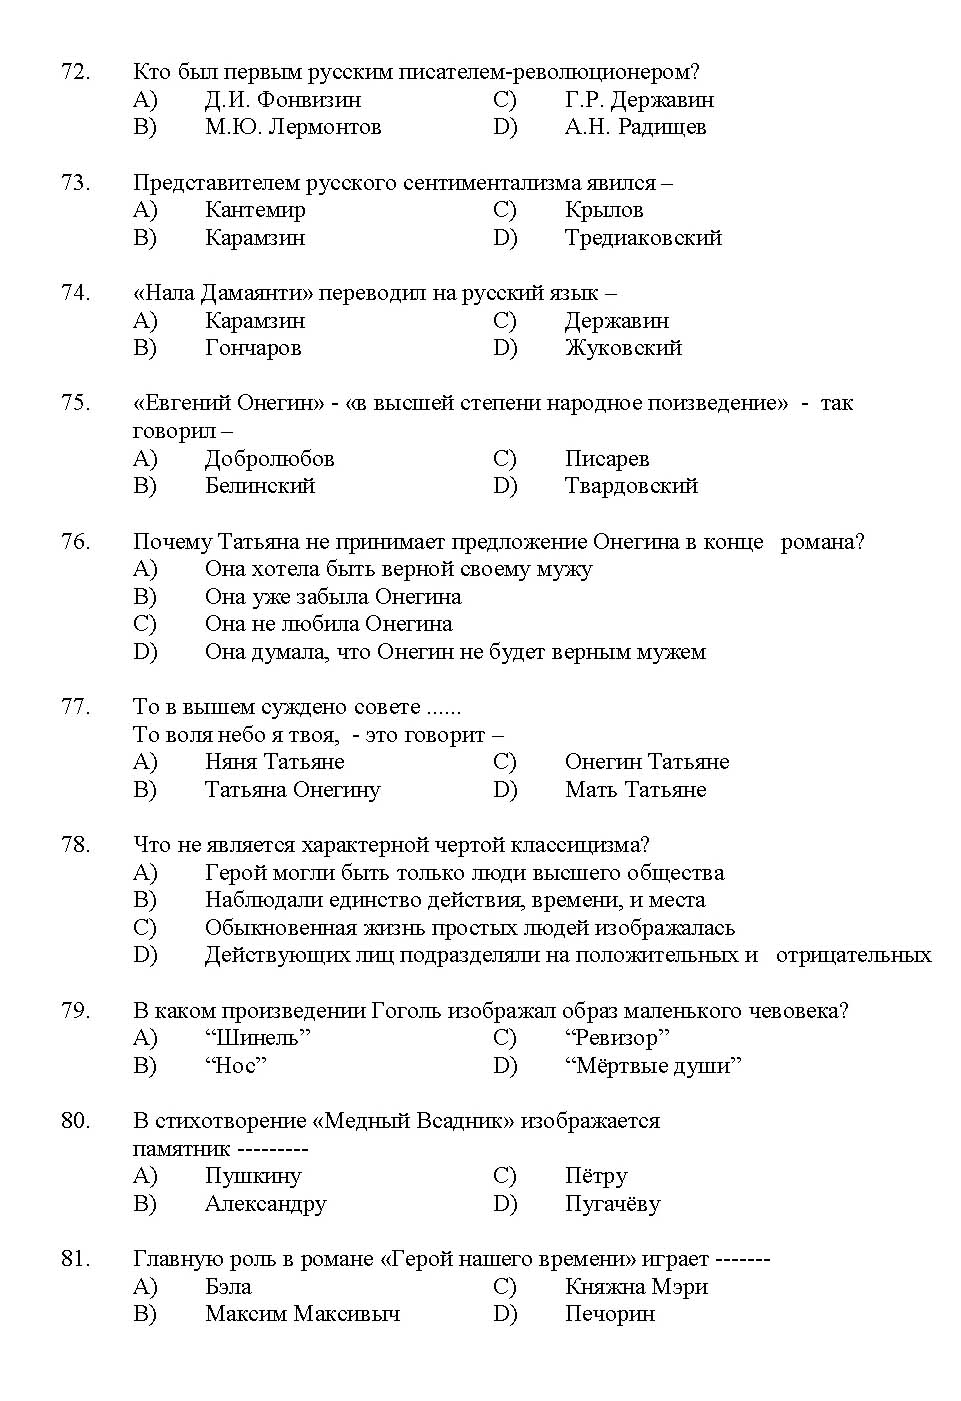 Kerala SET Russian Exam 2011 Question Code 91127 7